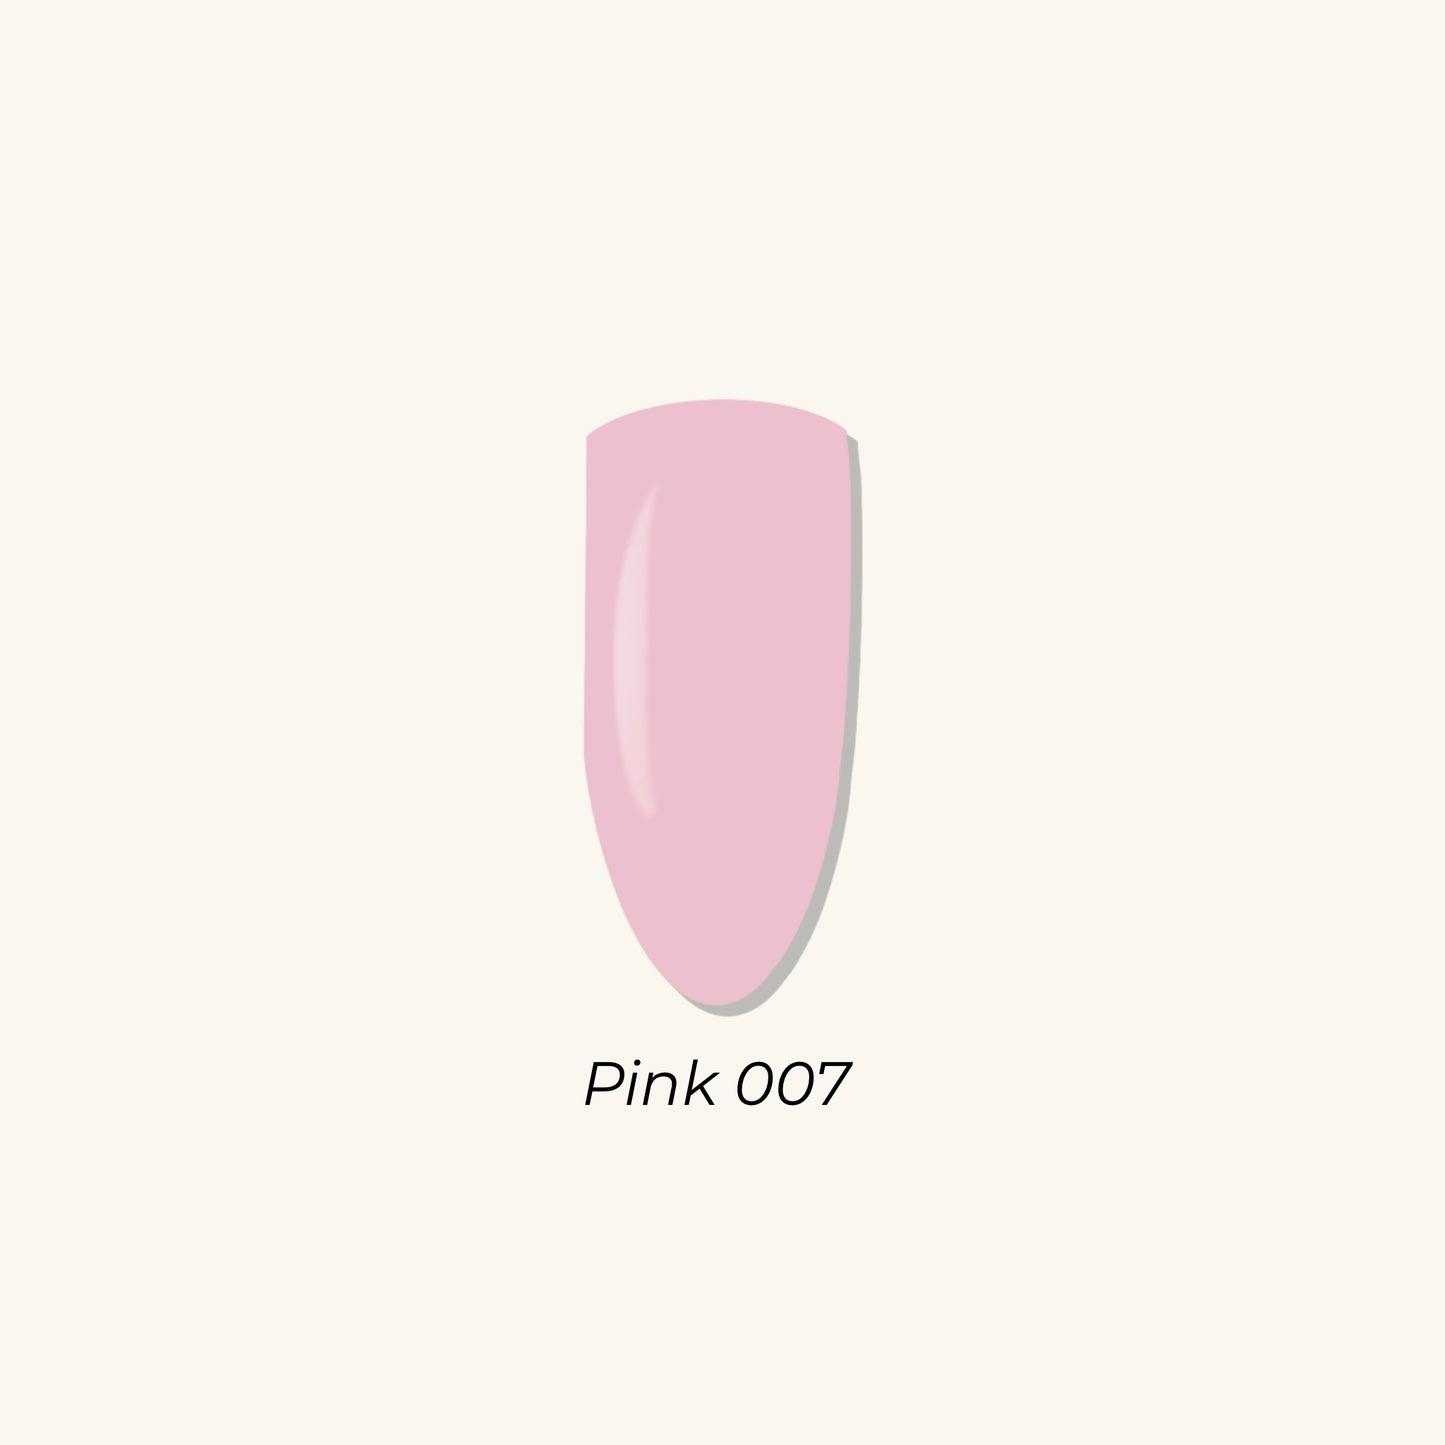 Pink 007